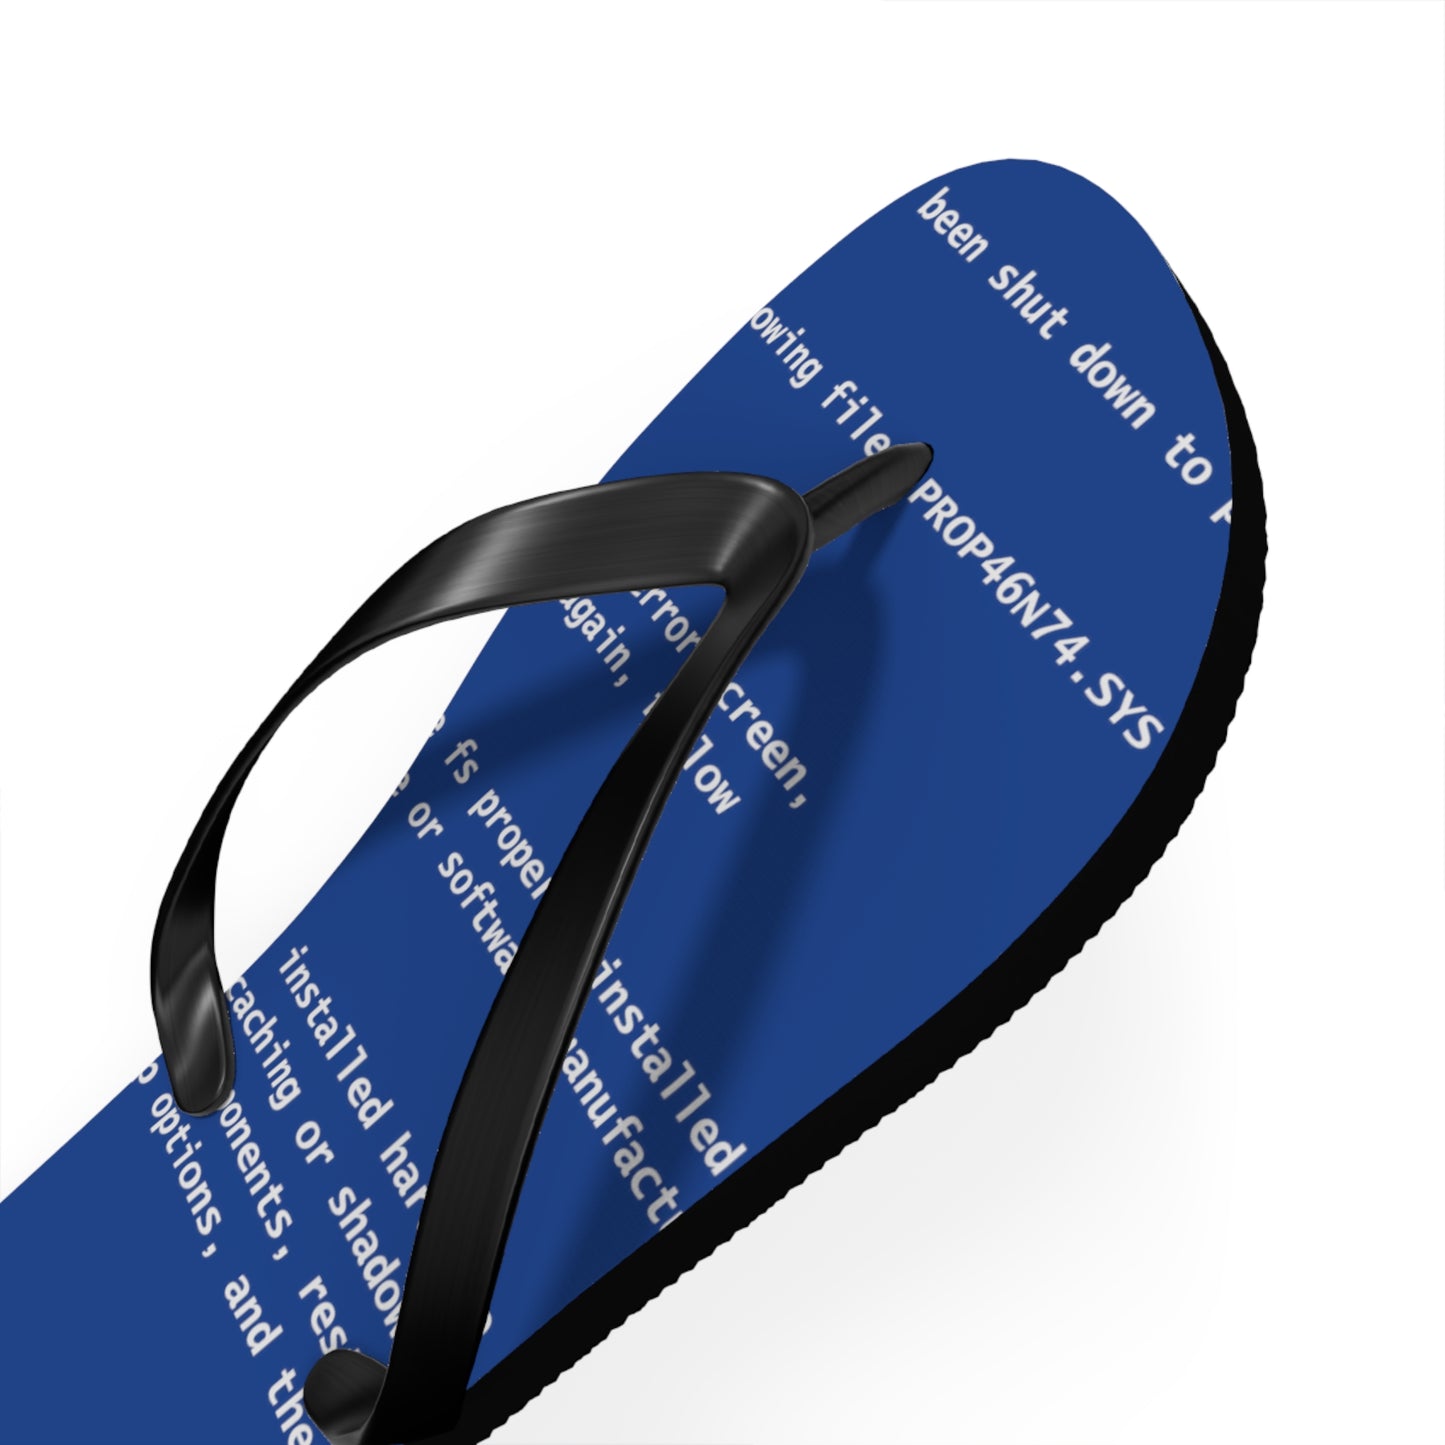 BSoD (Blue Screen of Death) Flip Flops